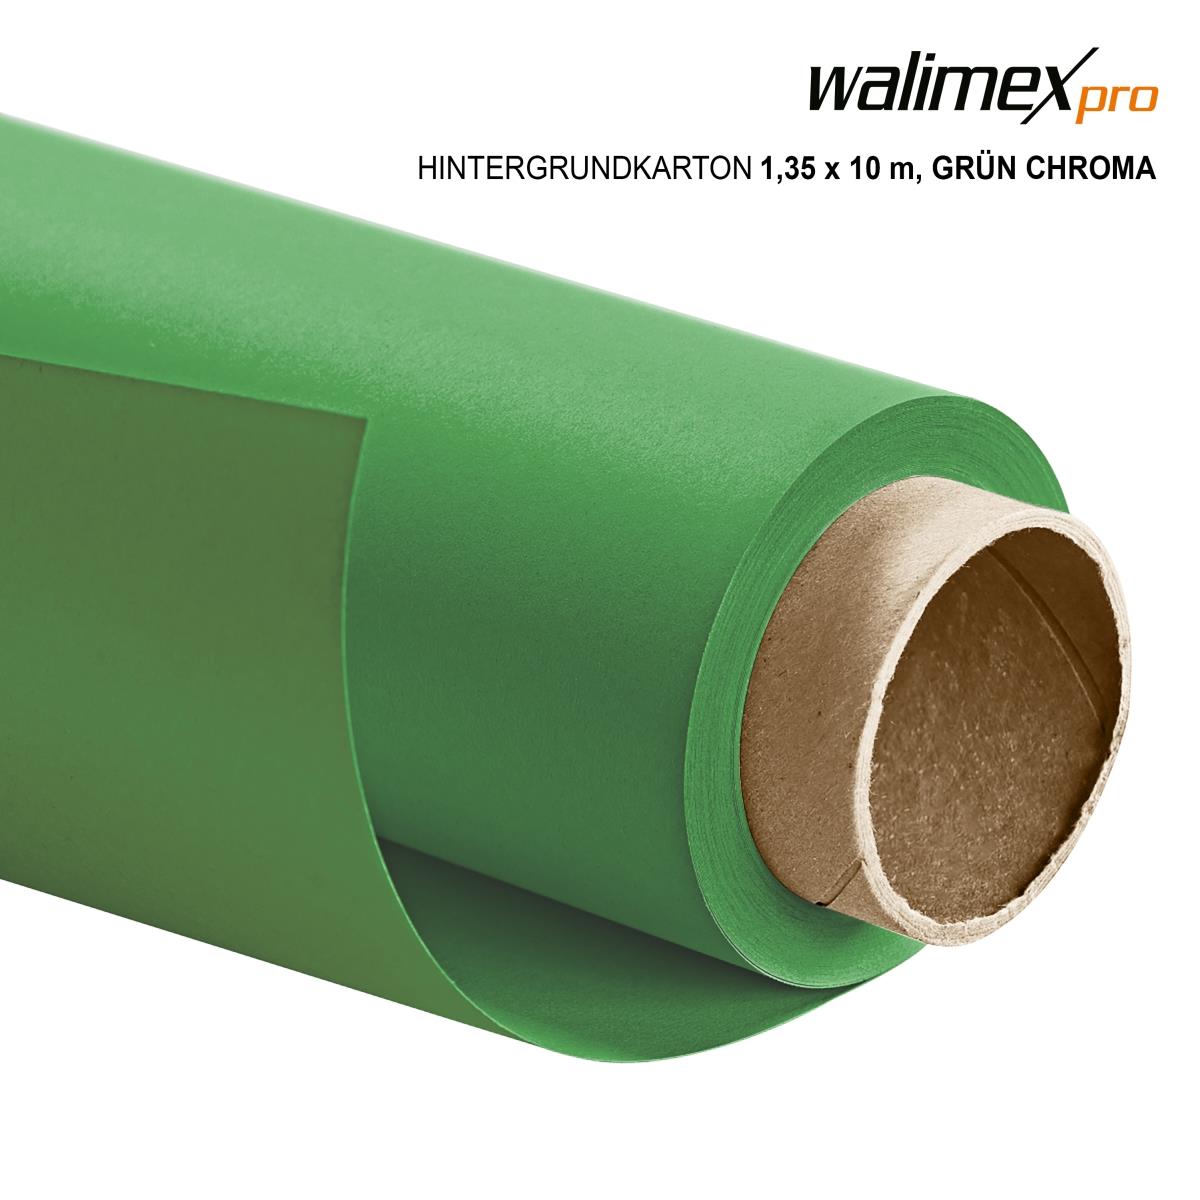 Walimex pro Hintergrundkarton 1,35x10m,grün chroma